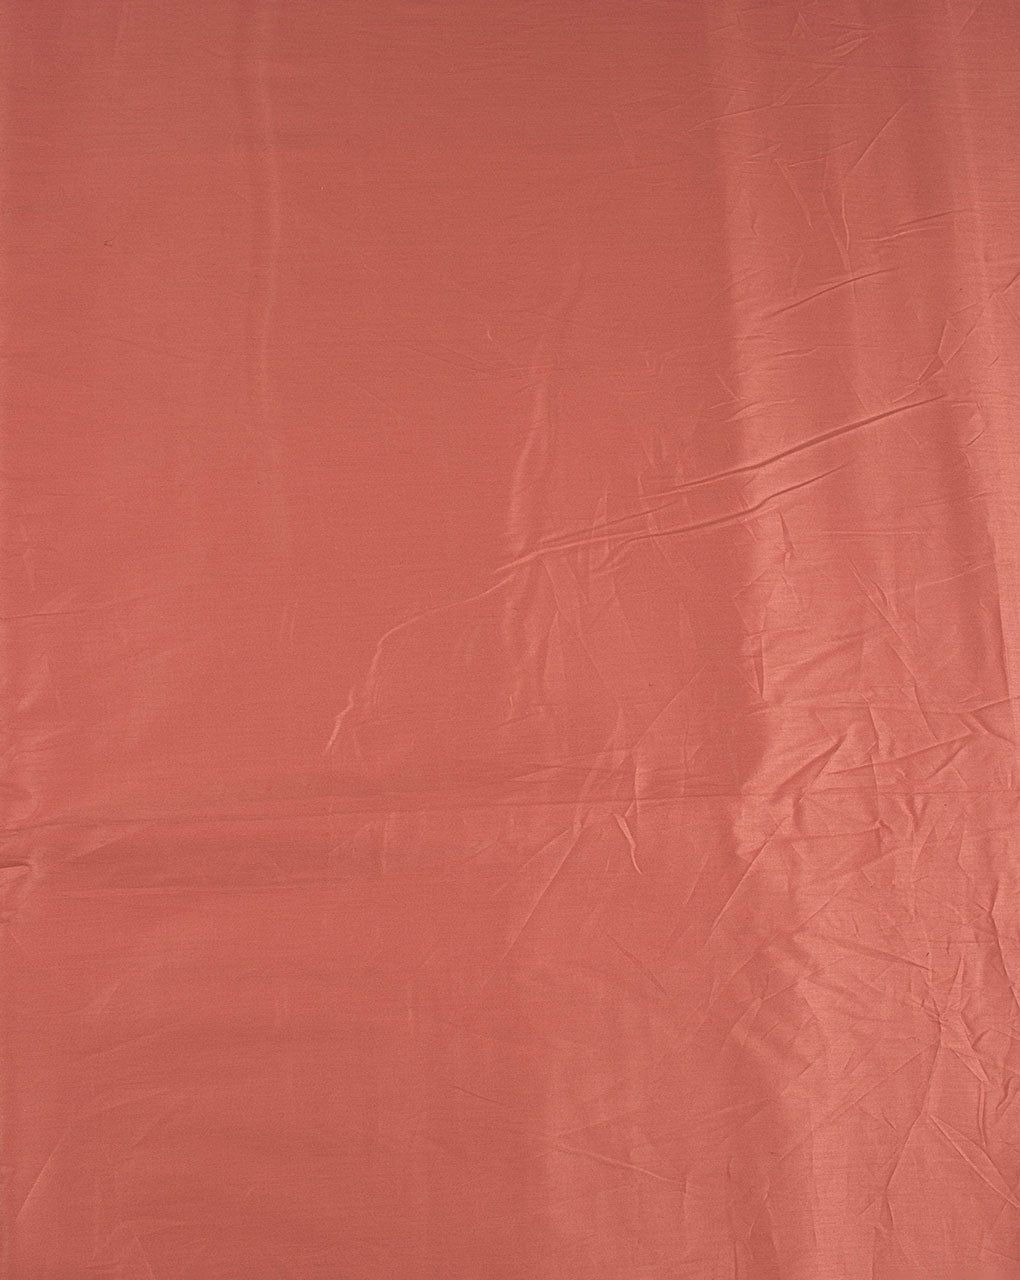 Salmon Plain Glazed Cotton Fabric - Fabriclore.com